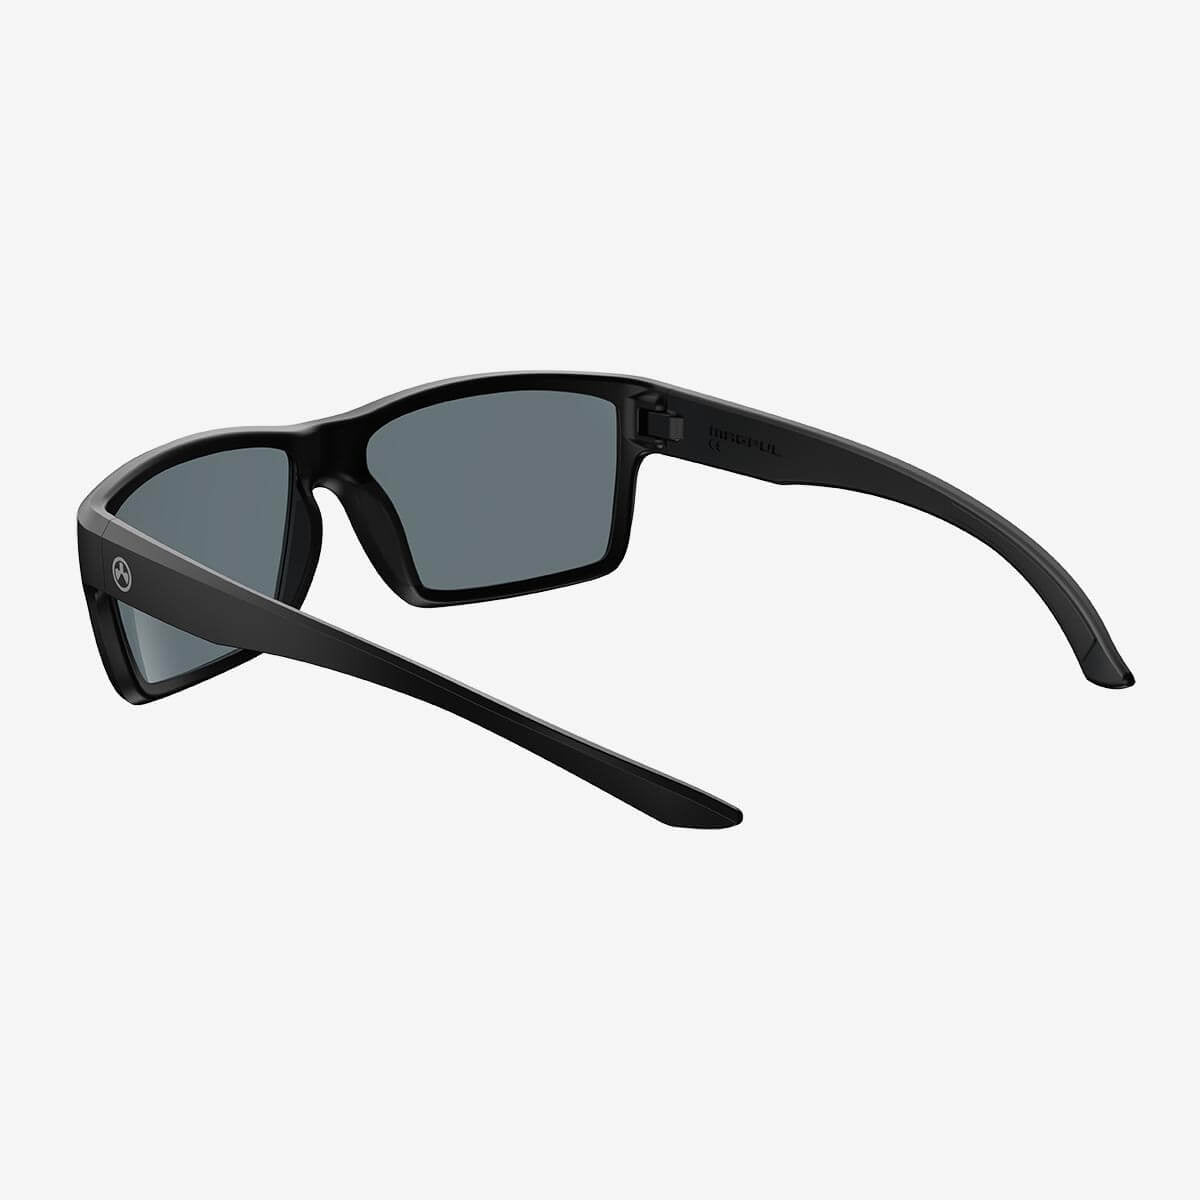 Magpul - Explorer Eyewear, Polarized - Black Frame, Gray Lens/Silver Mirror